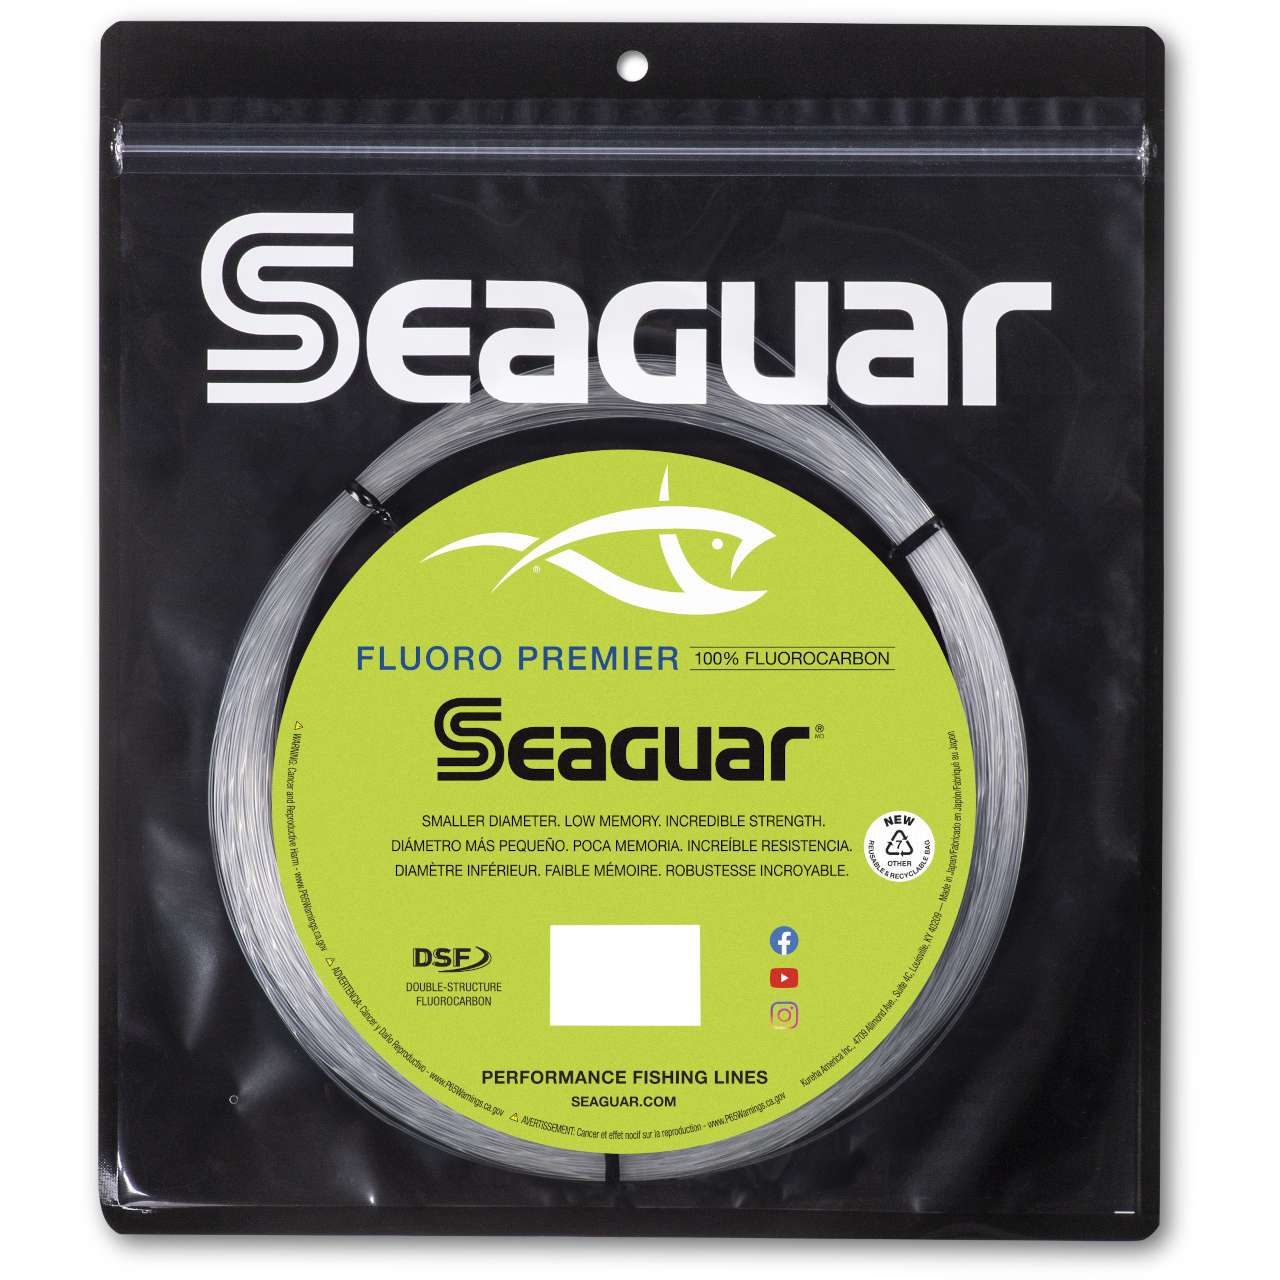 Seaguar Fluoro Premier Big Game Fishing Line 50 170 lb